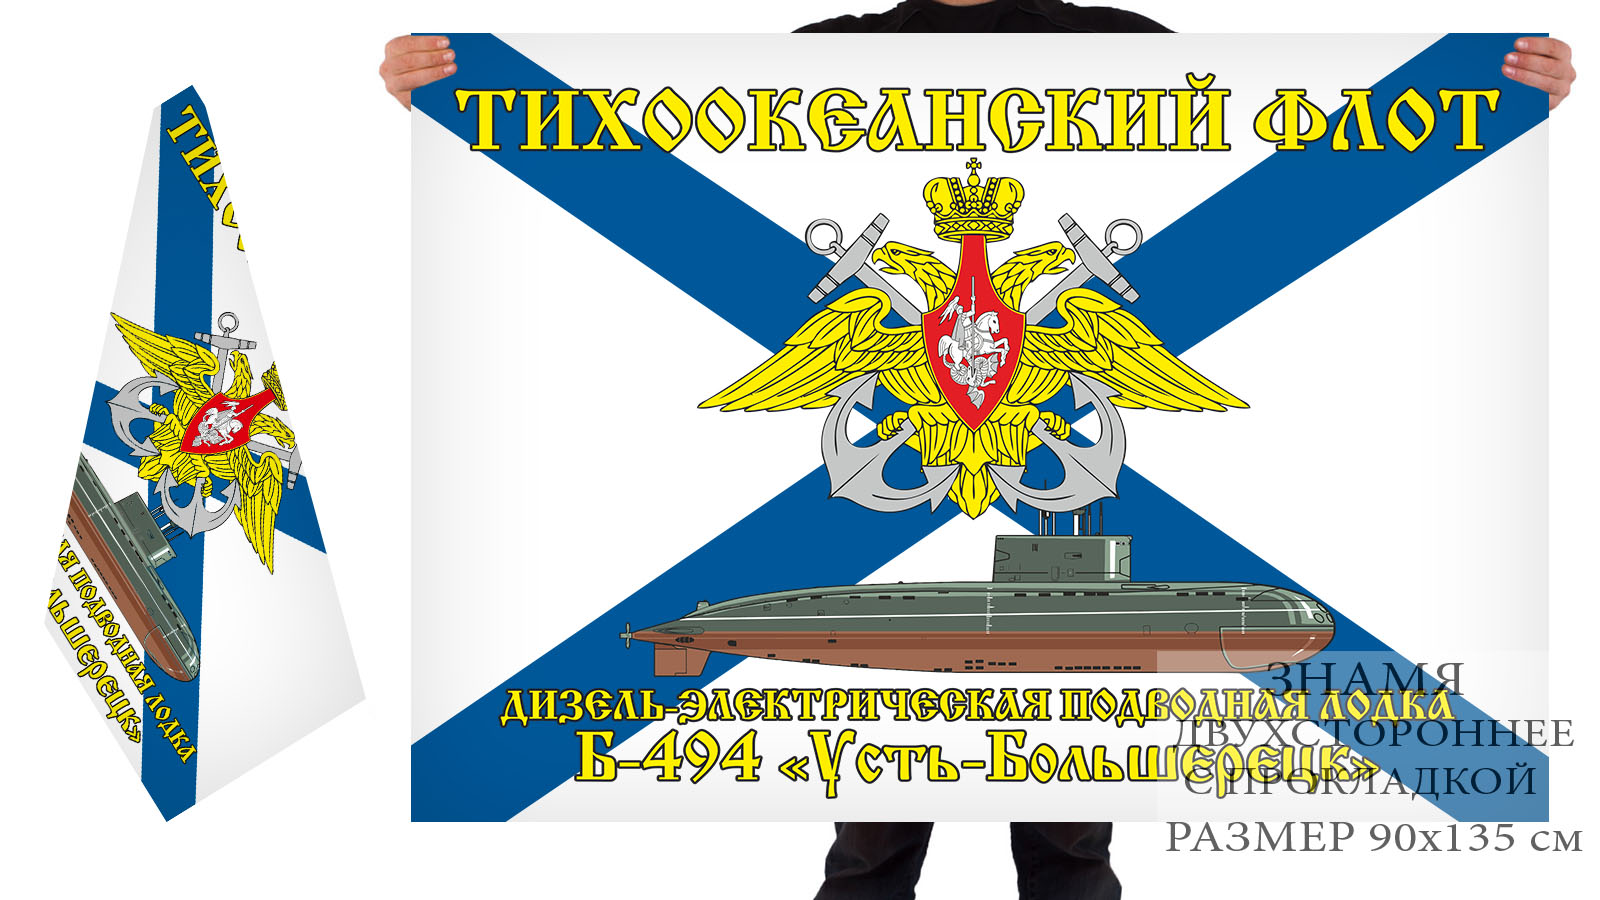 Двусторонний флаг ДЭПЛ Б-494 "Усть-Большерецк"